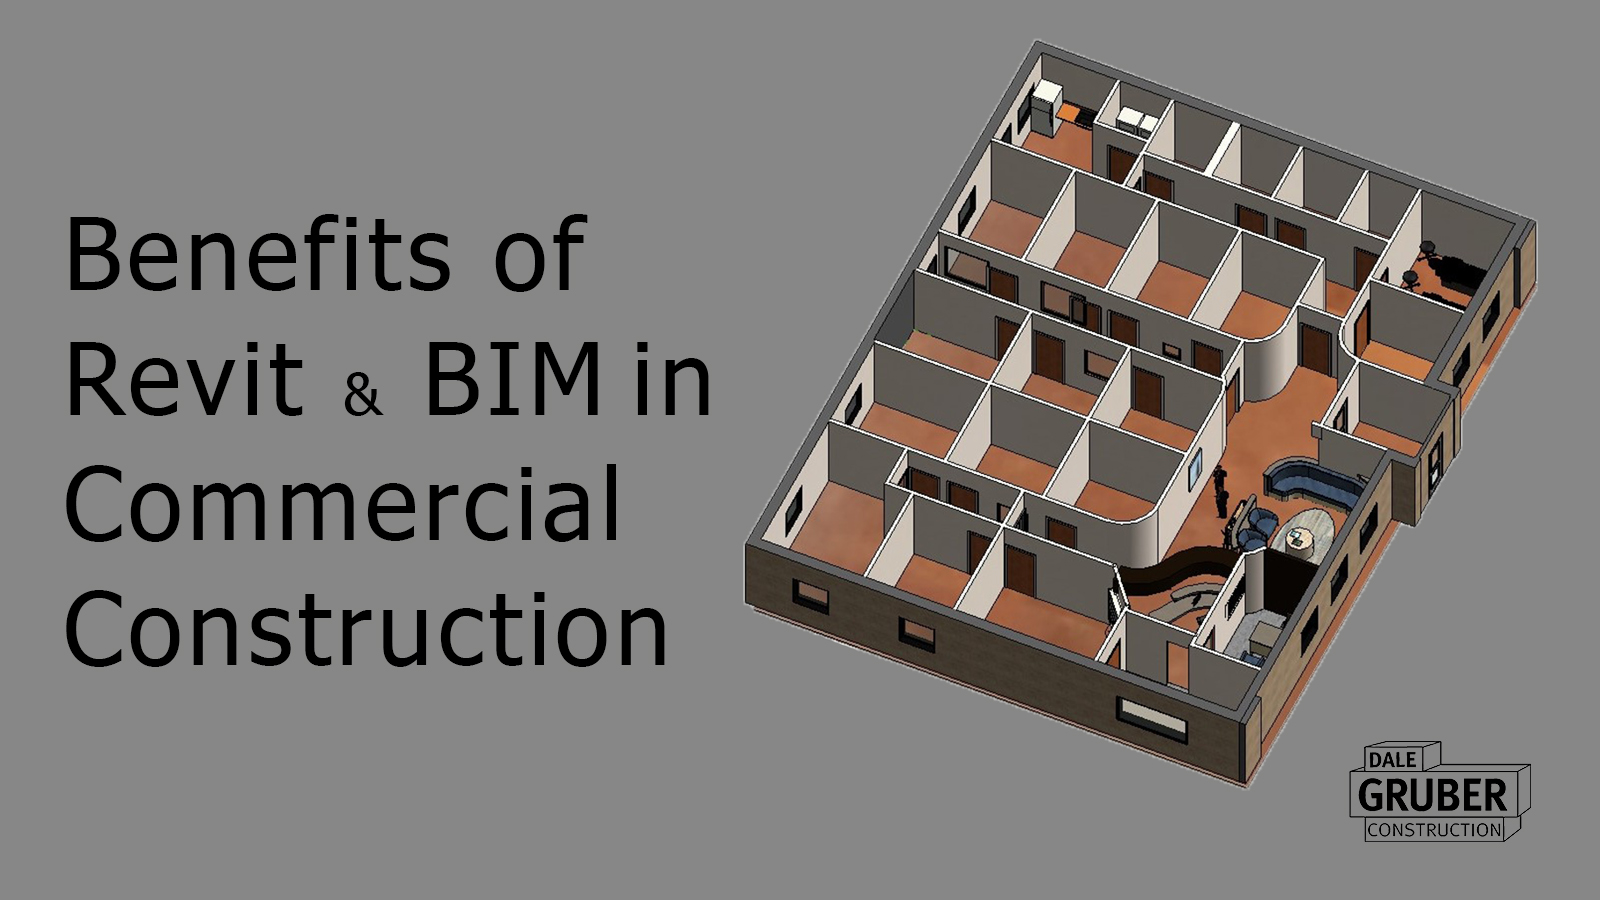 Benefits of Revit & BIM in Commercial Construction